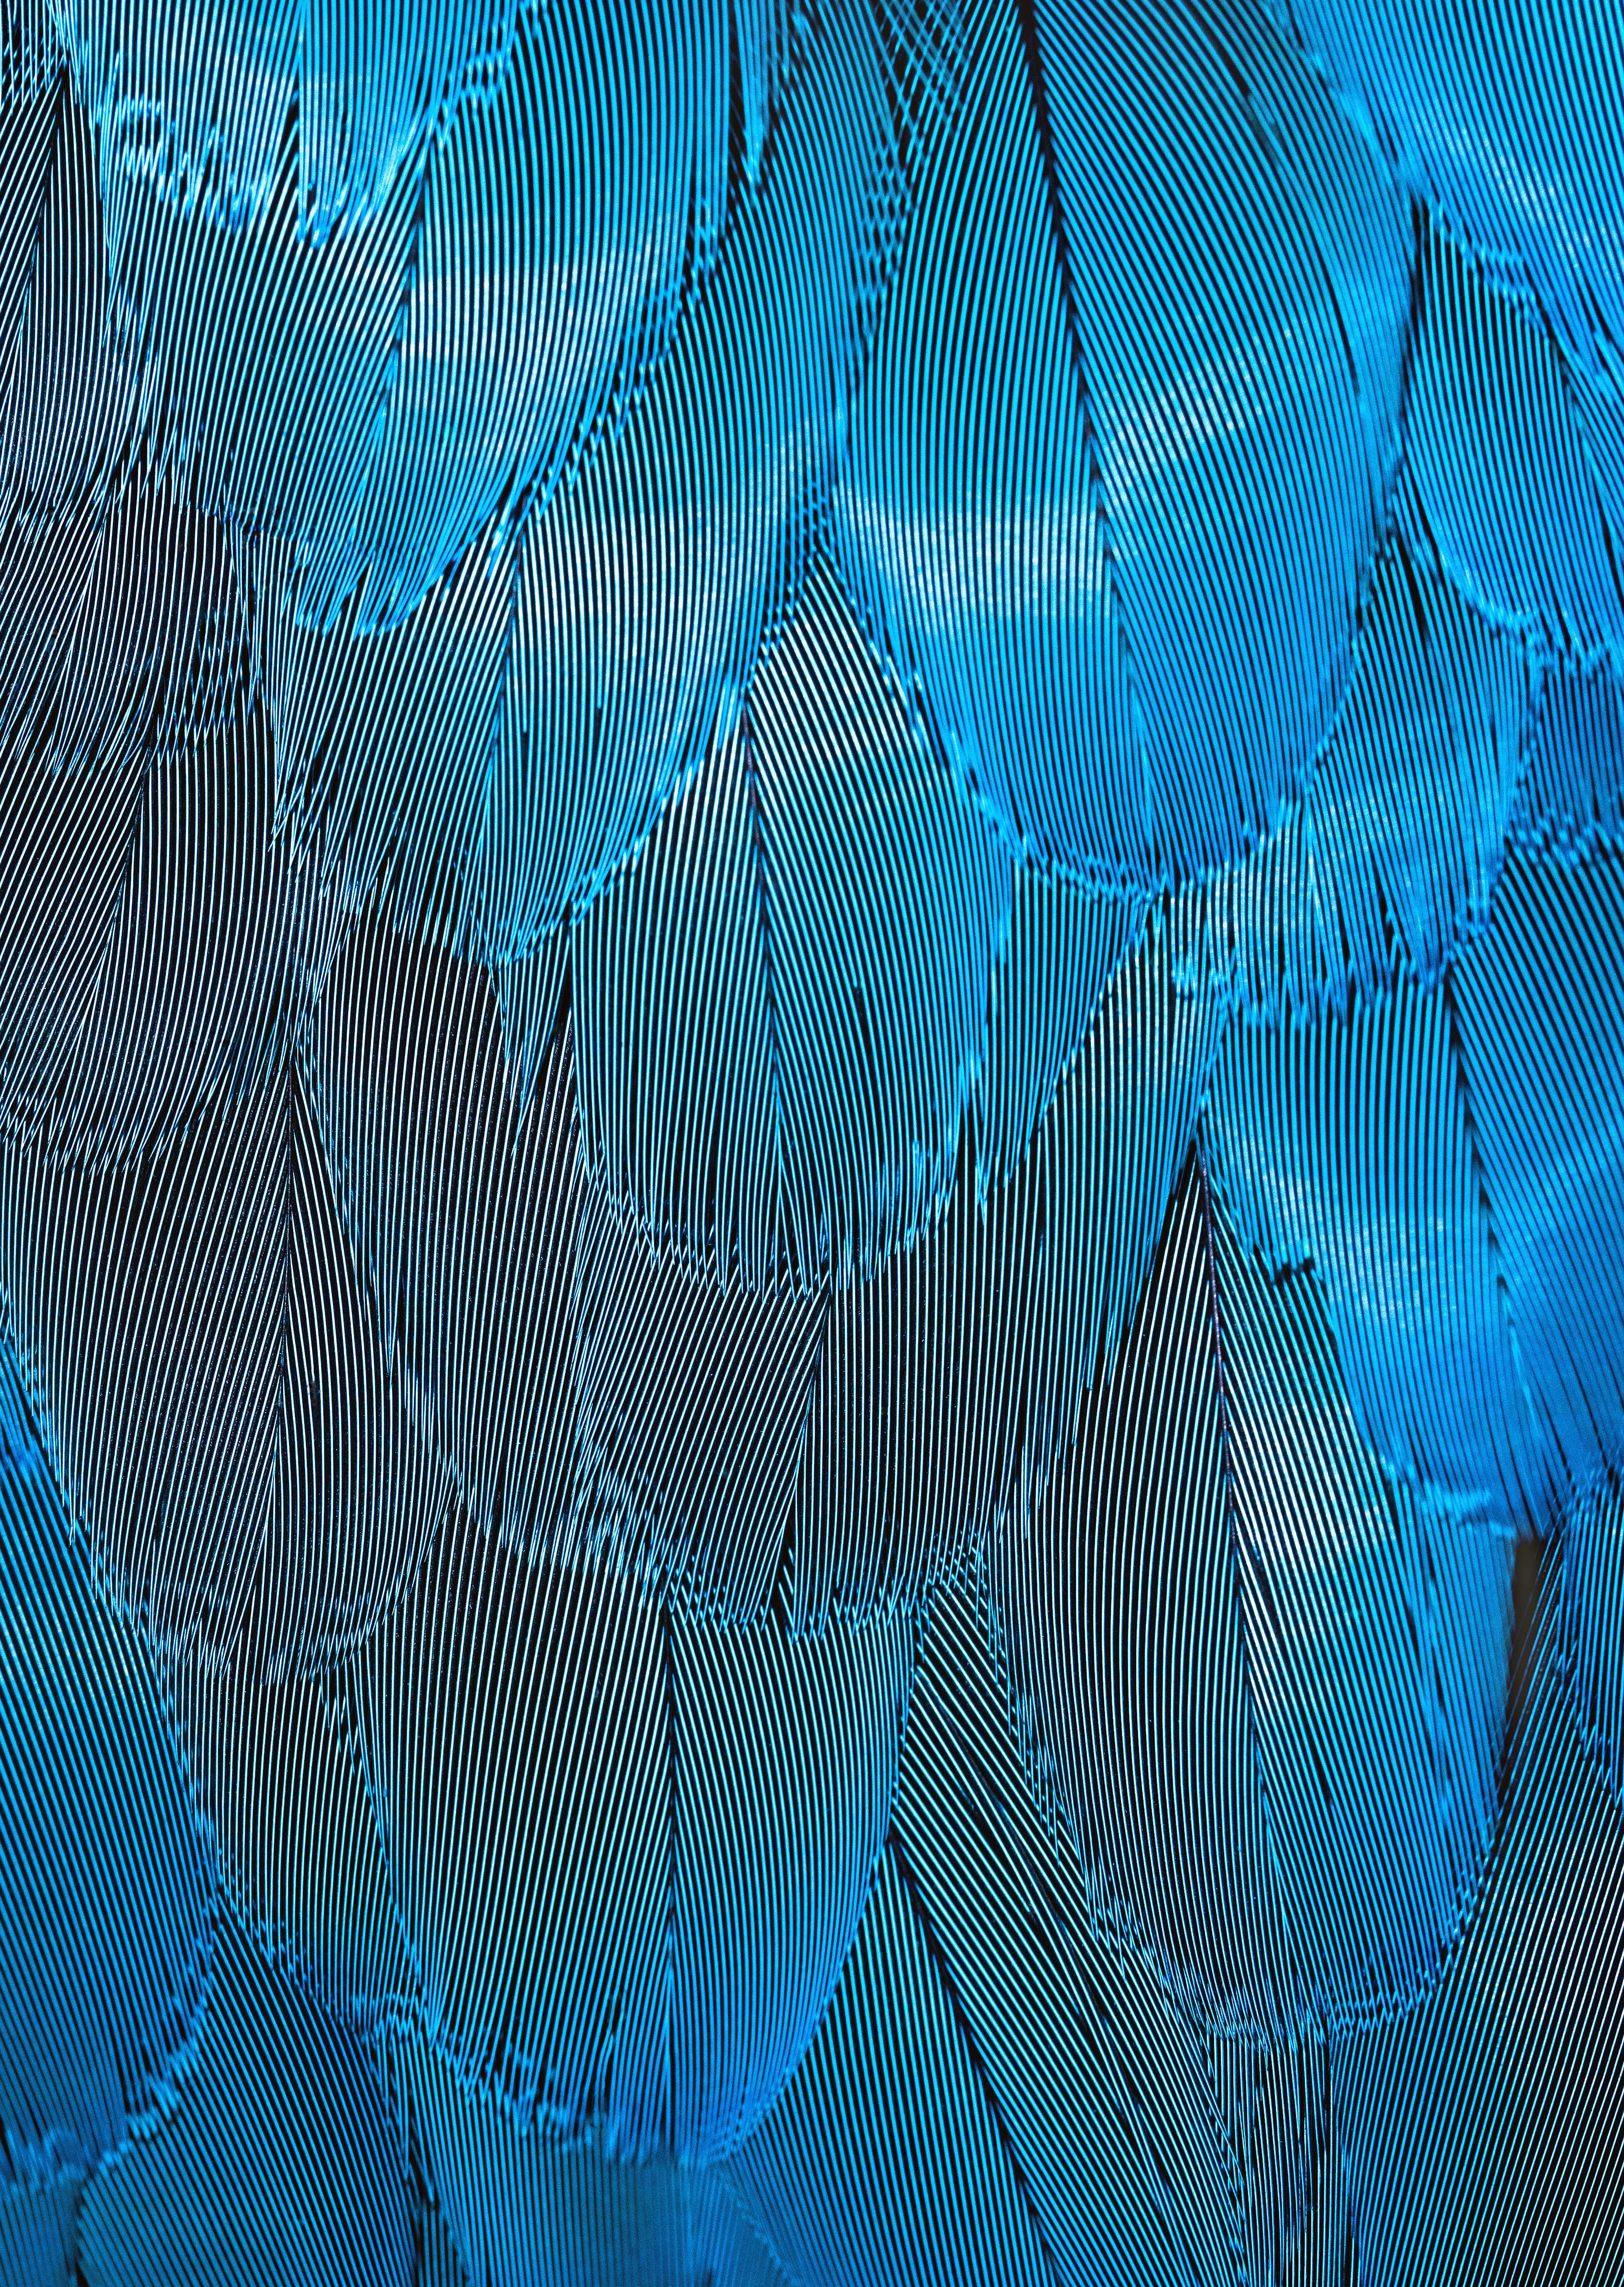 macro, textures, feather, blue, texture, iridescent 32K